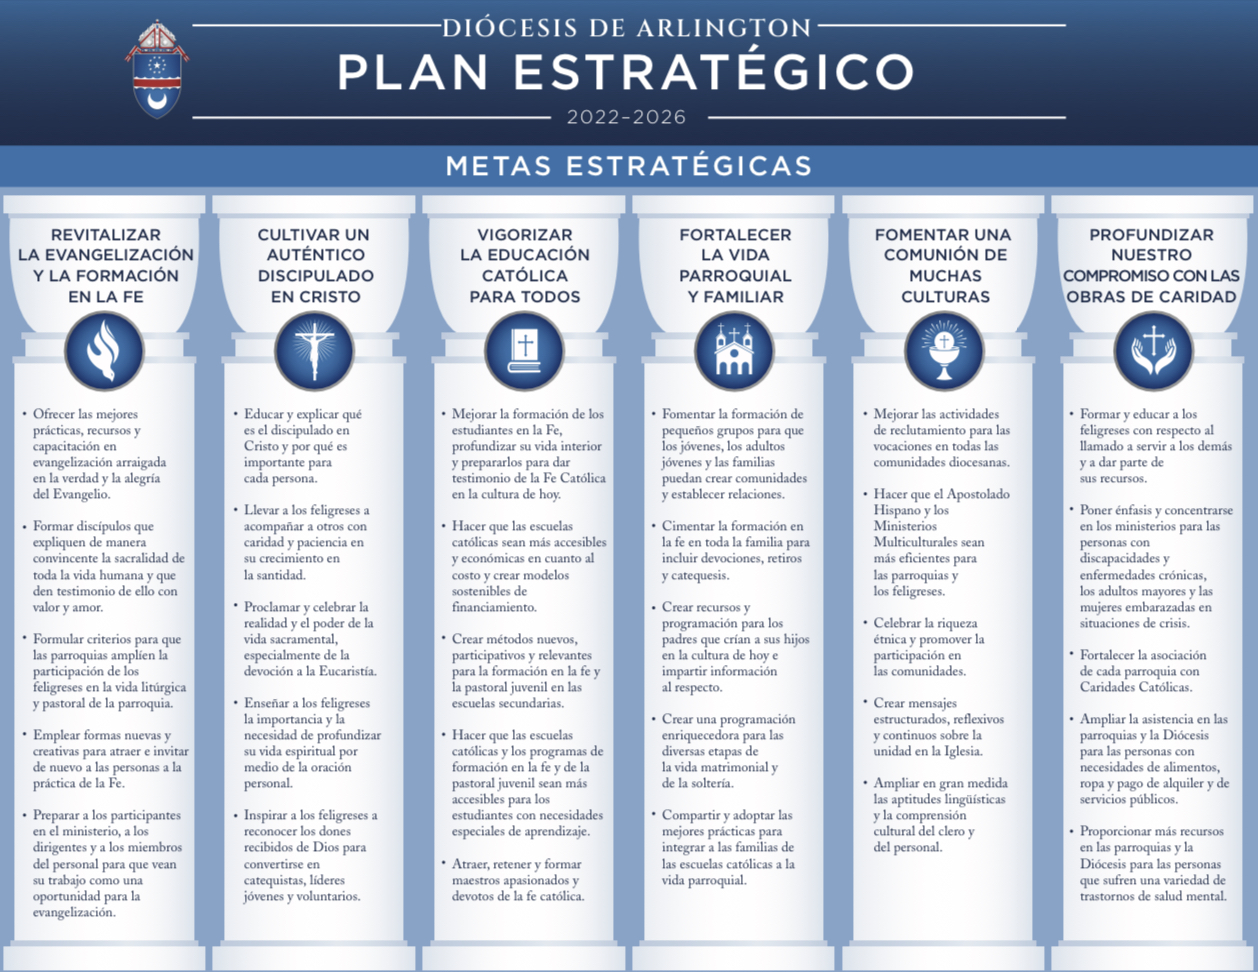 Strategic Plan 2